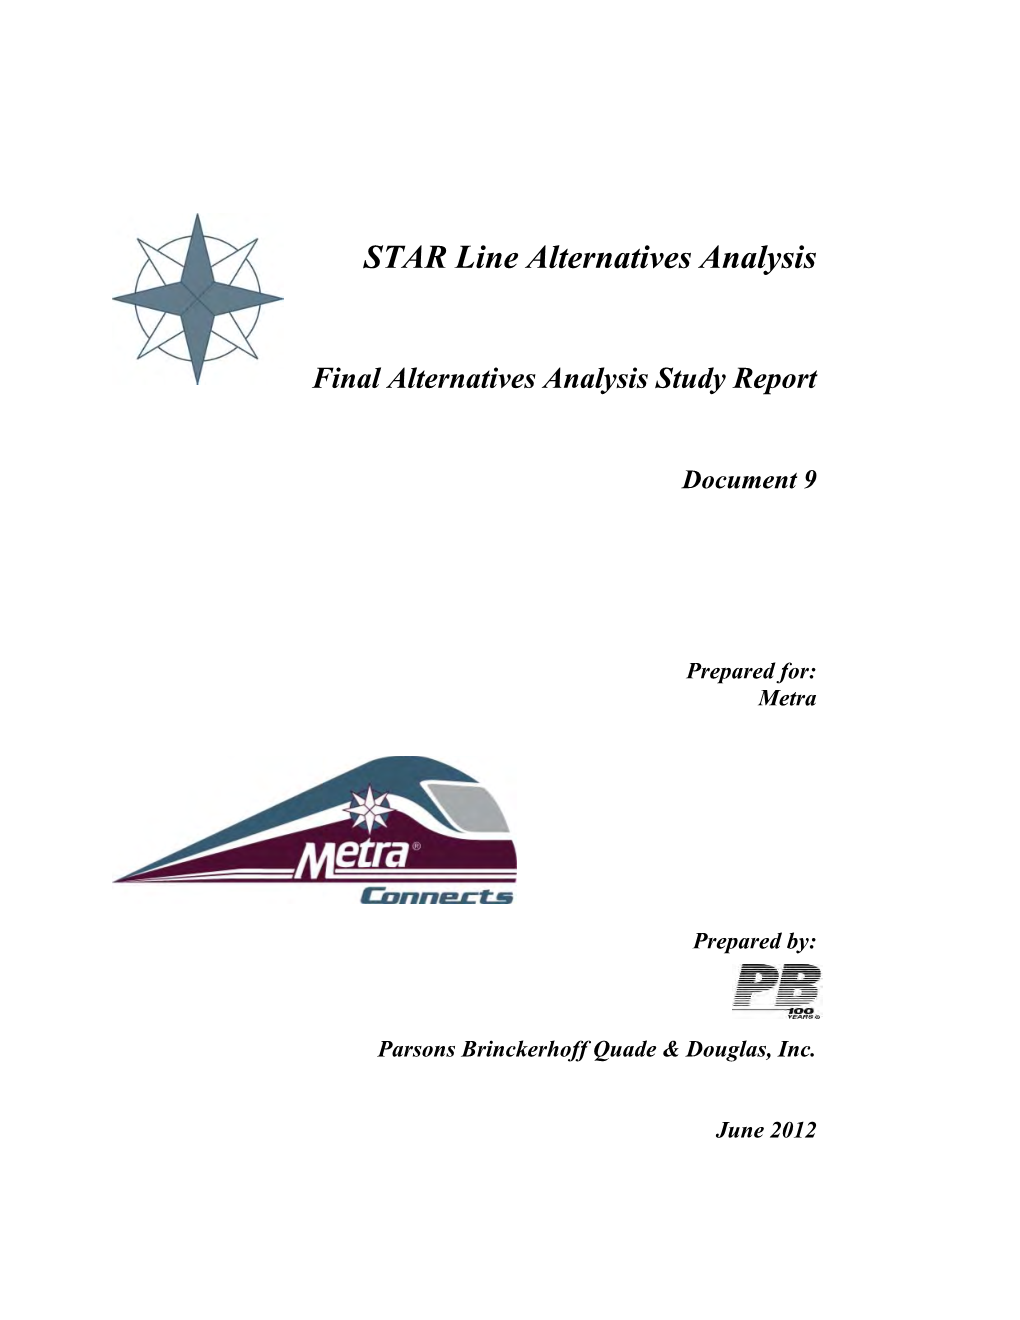 STAR Line Alternatives Analysis